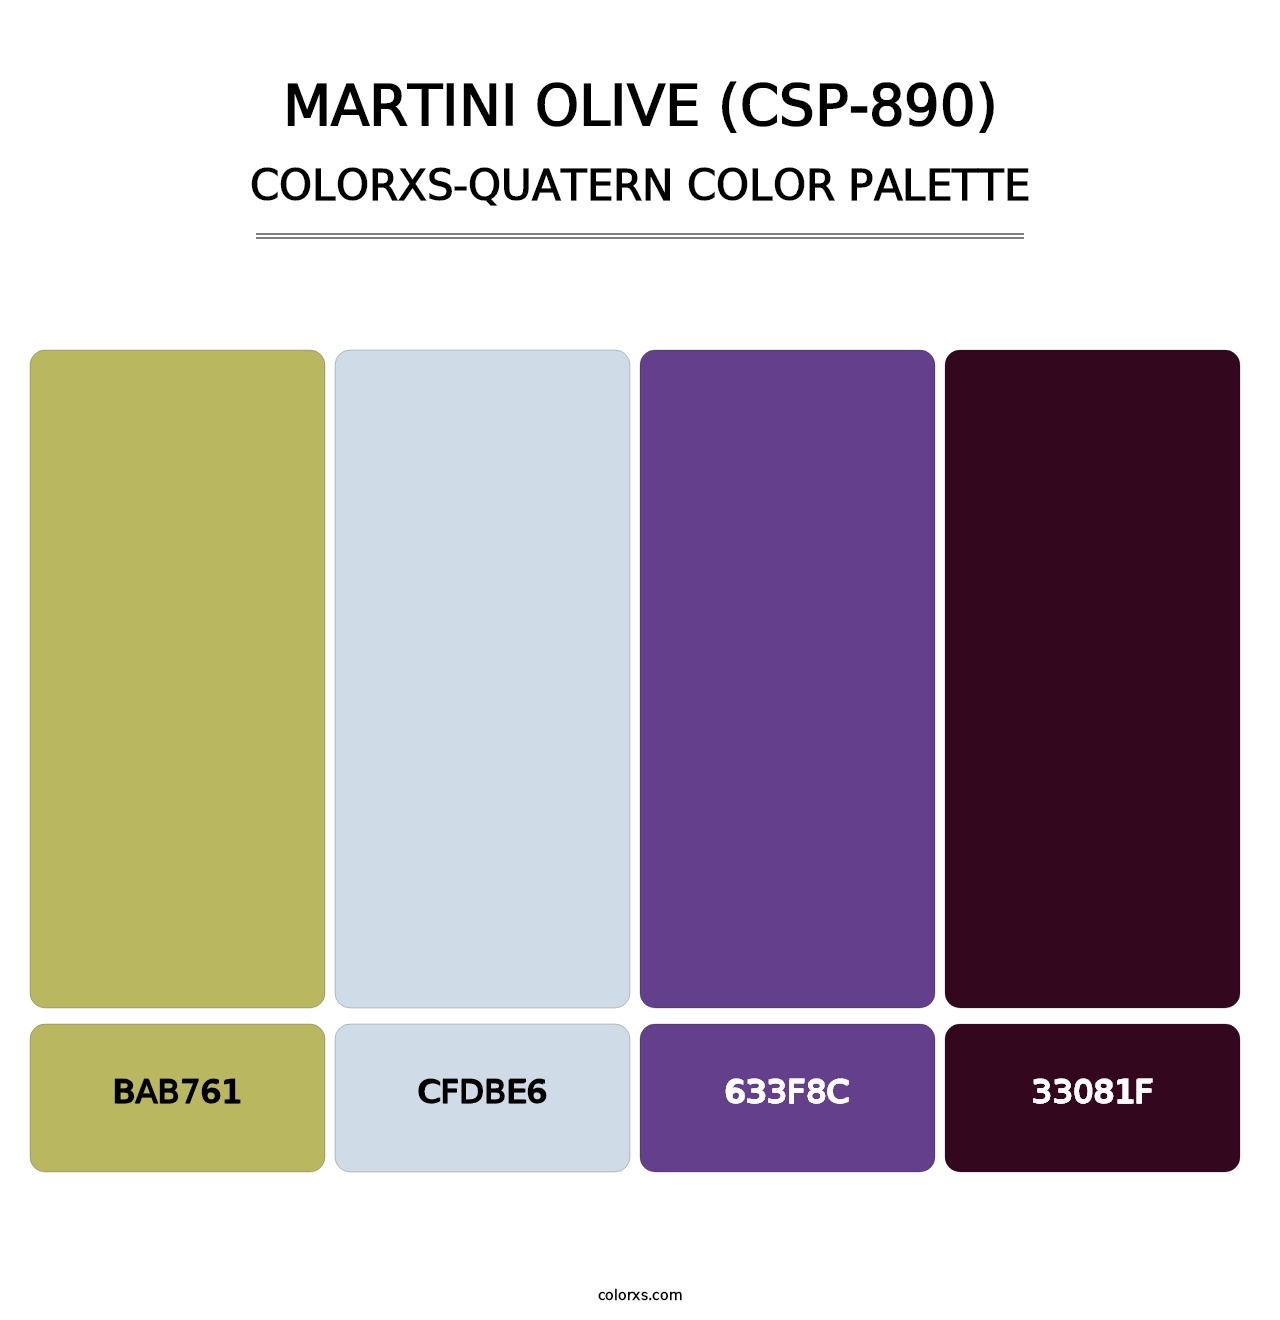 Martini Olive (CSP-890) - Colorxs Quatern Palette